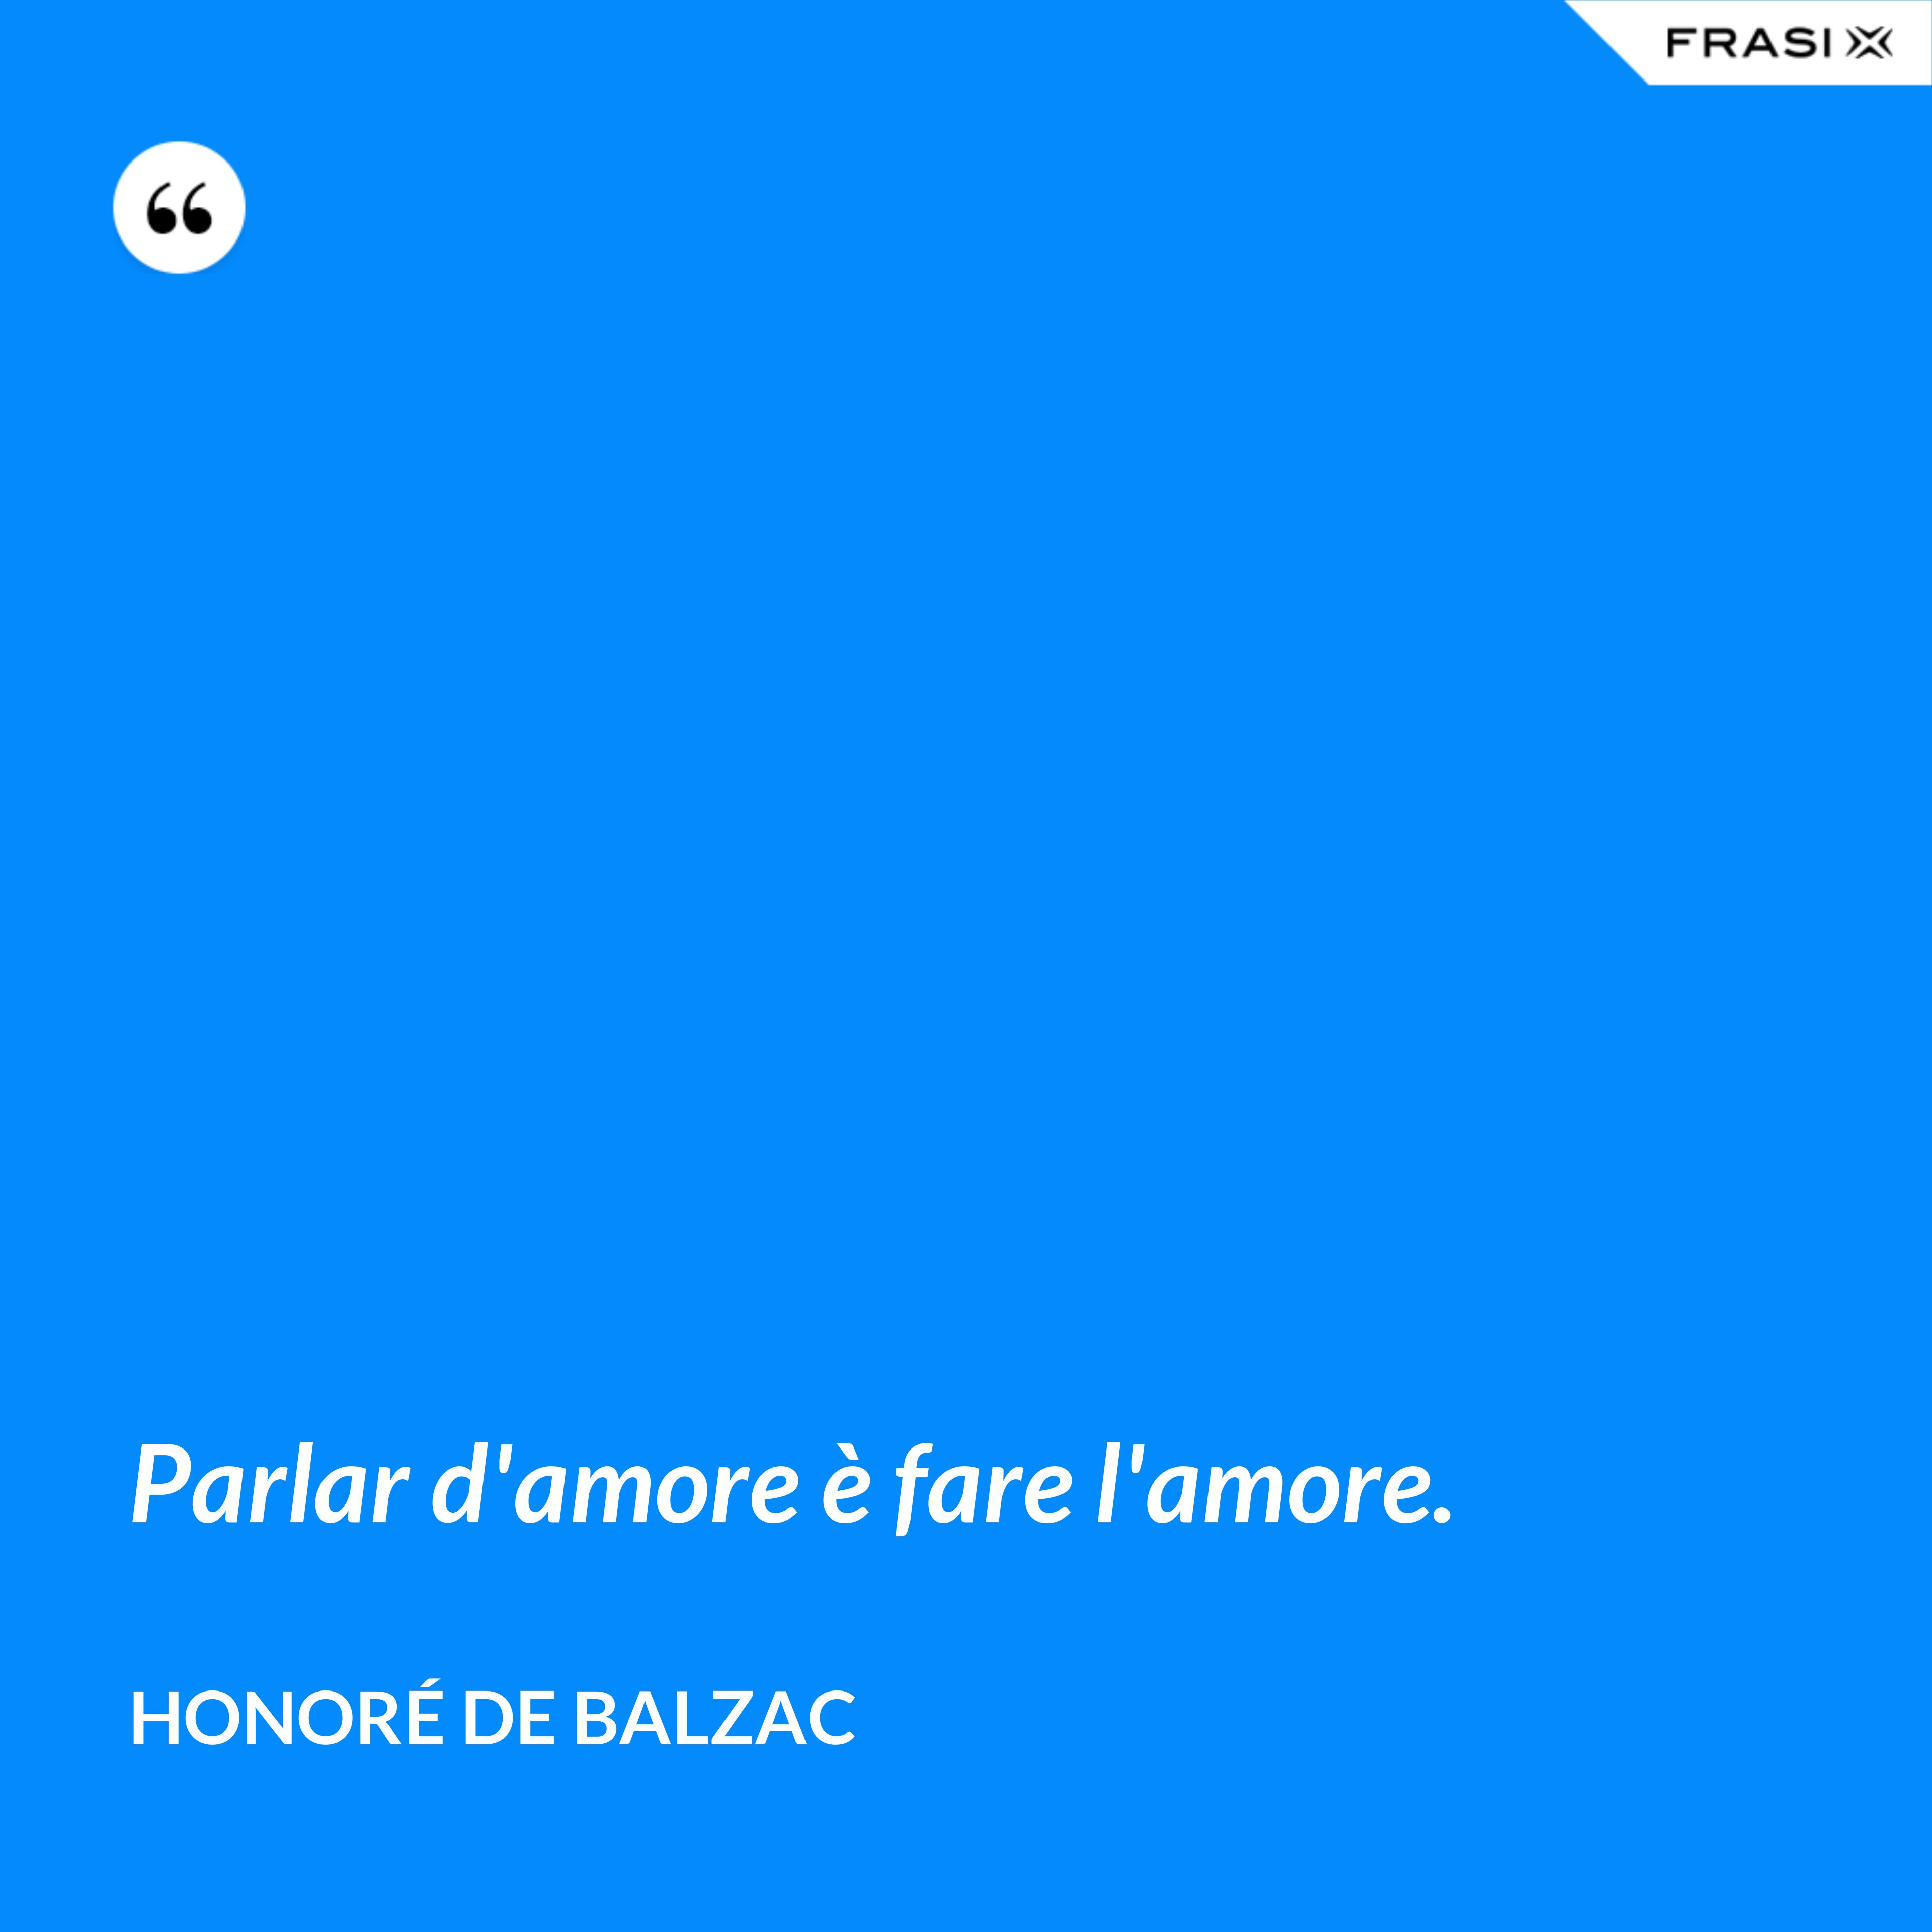 Parlar d'amore è fare l'amore. - Honoré de Balzac